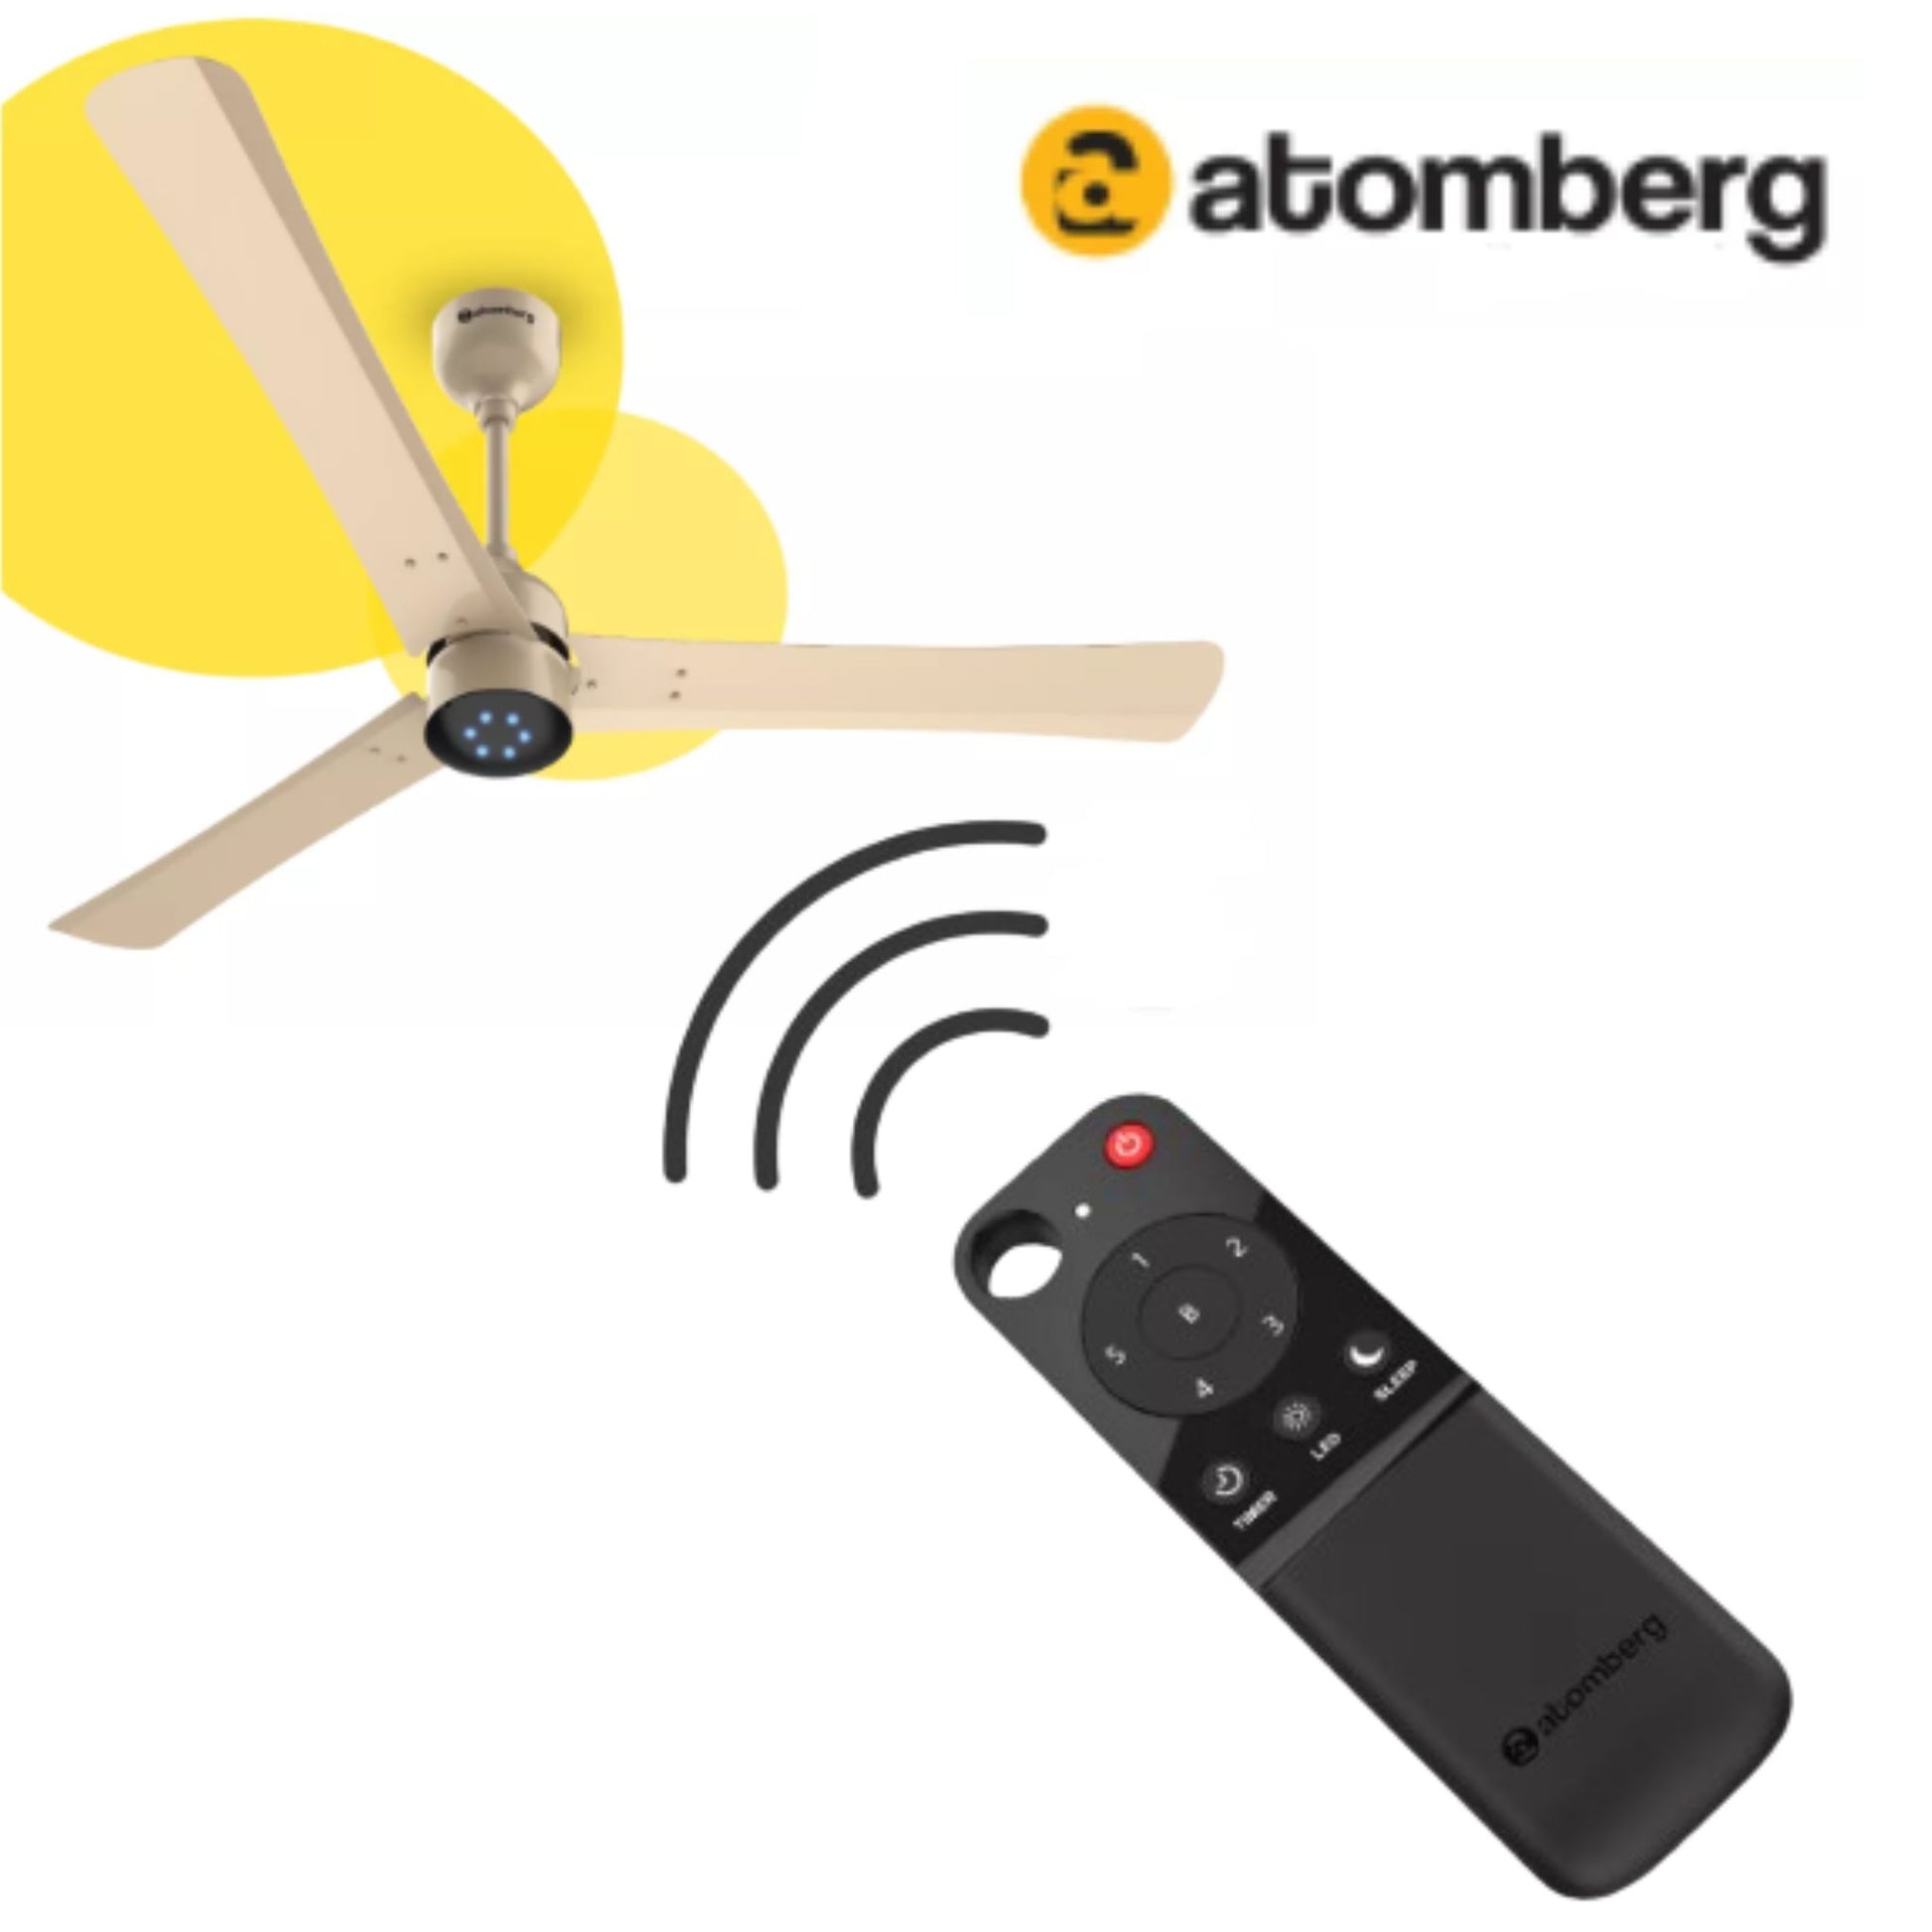 Atomberg Ceiling Fan Remote Control - Faritha